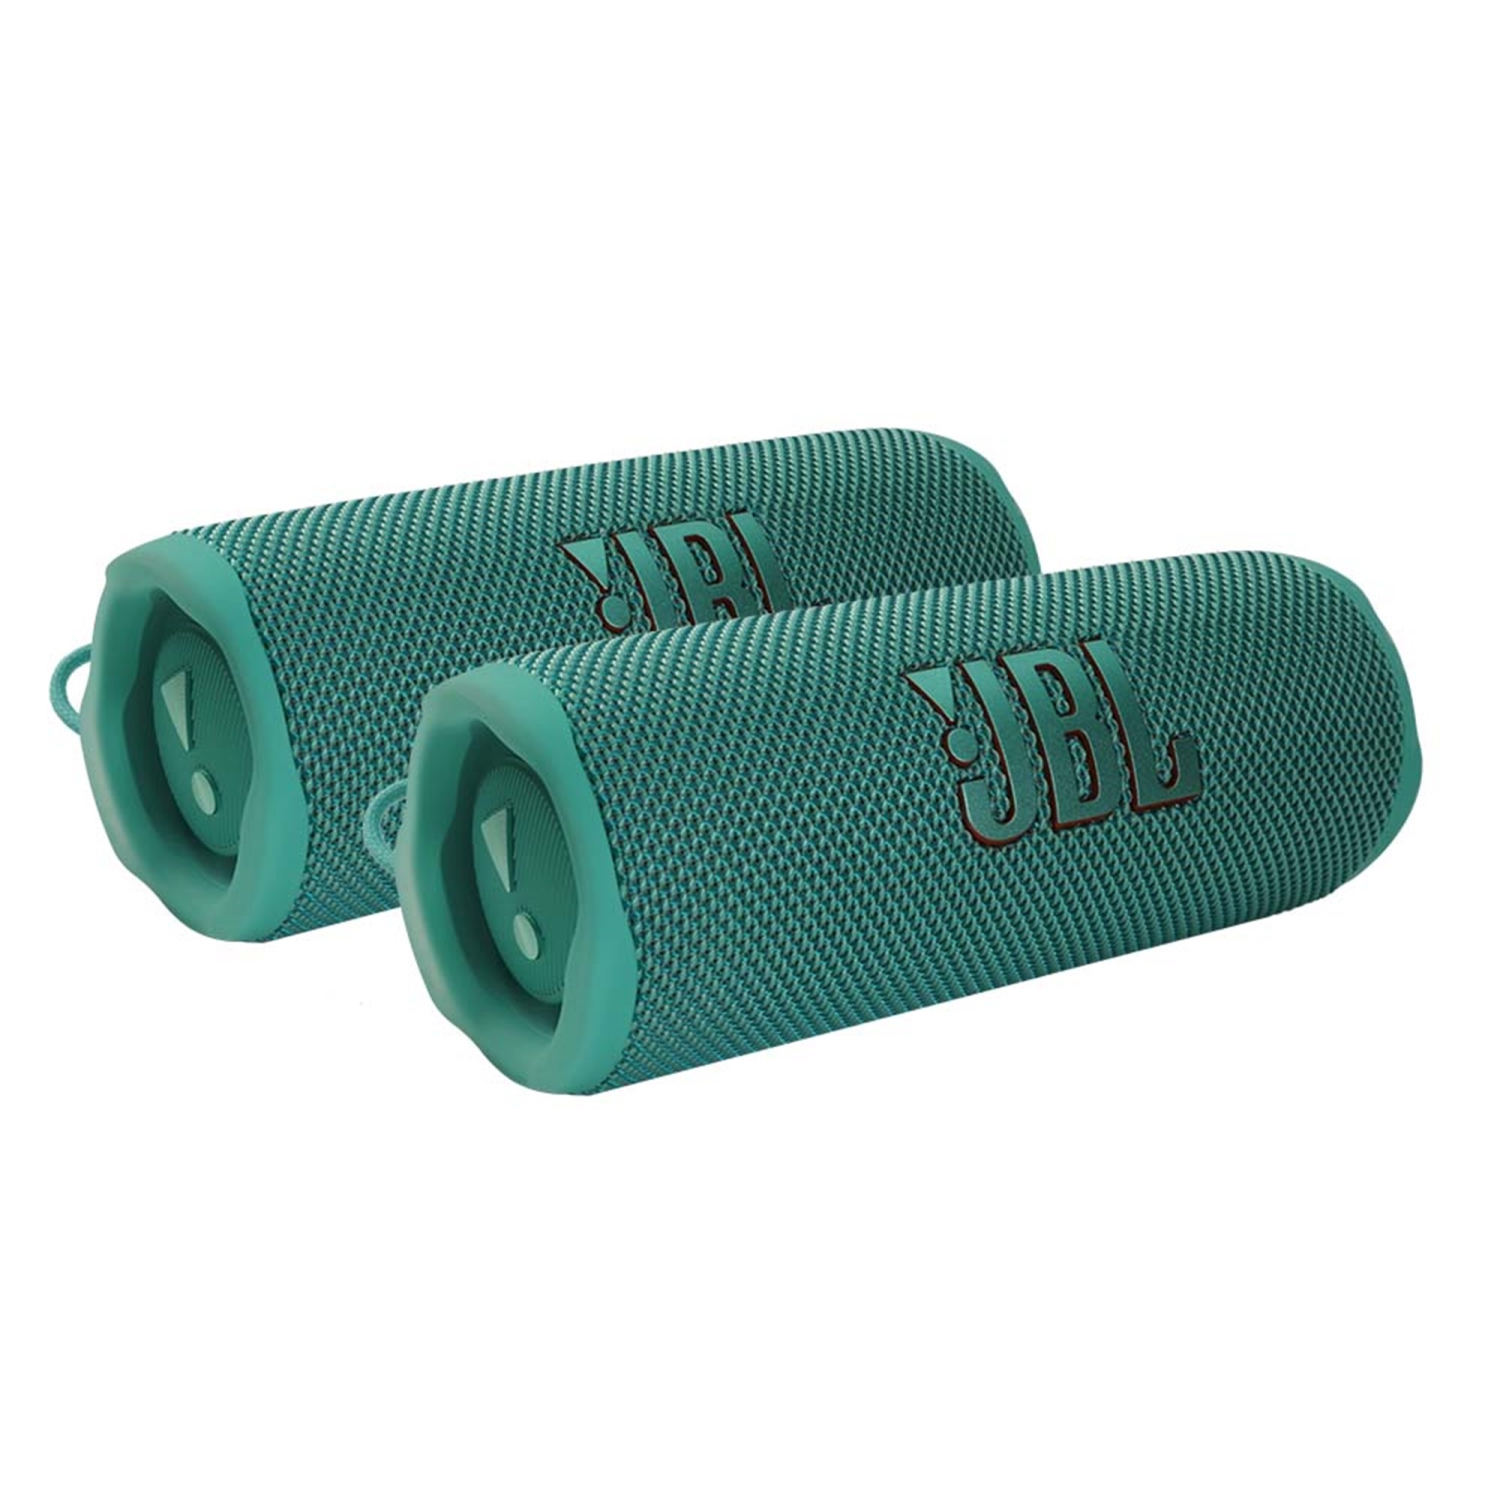 JBL FLIP 6 Wireless Portable Waterproof Speaker - Teal - 2 Count